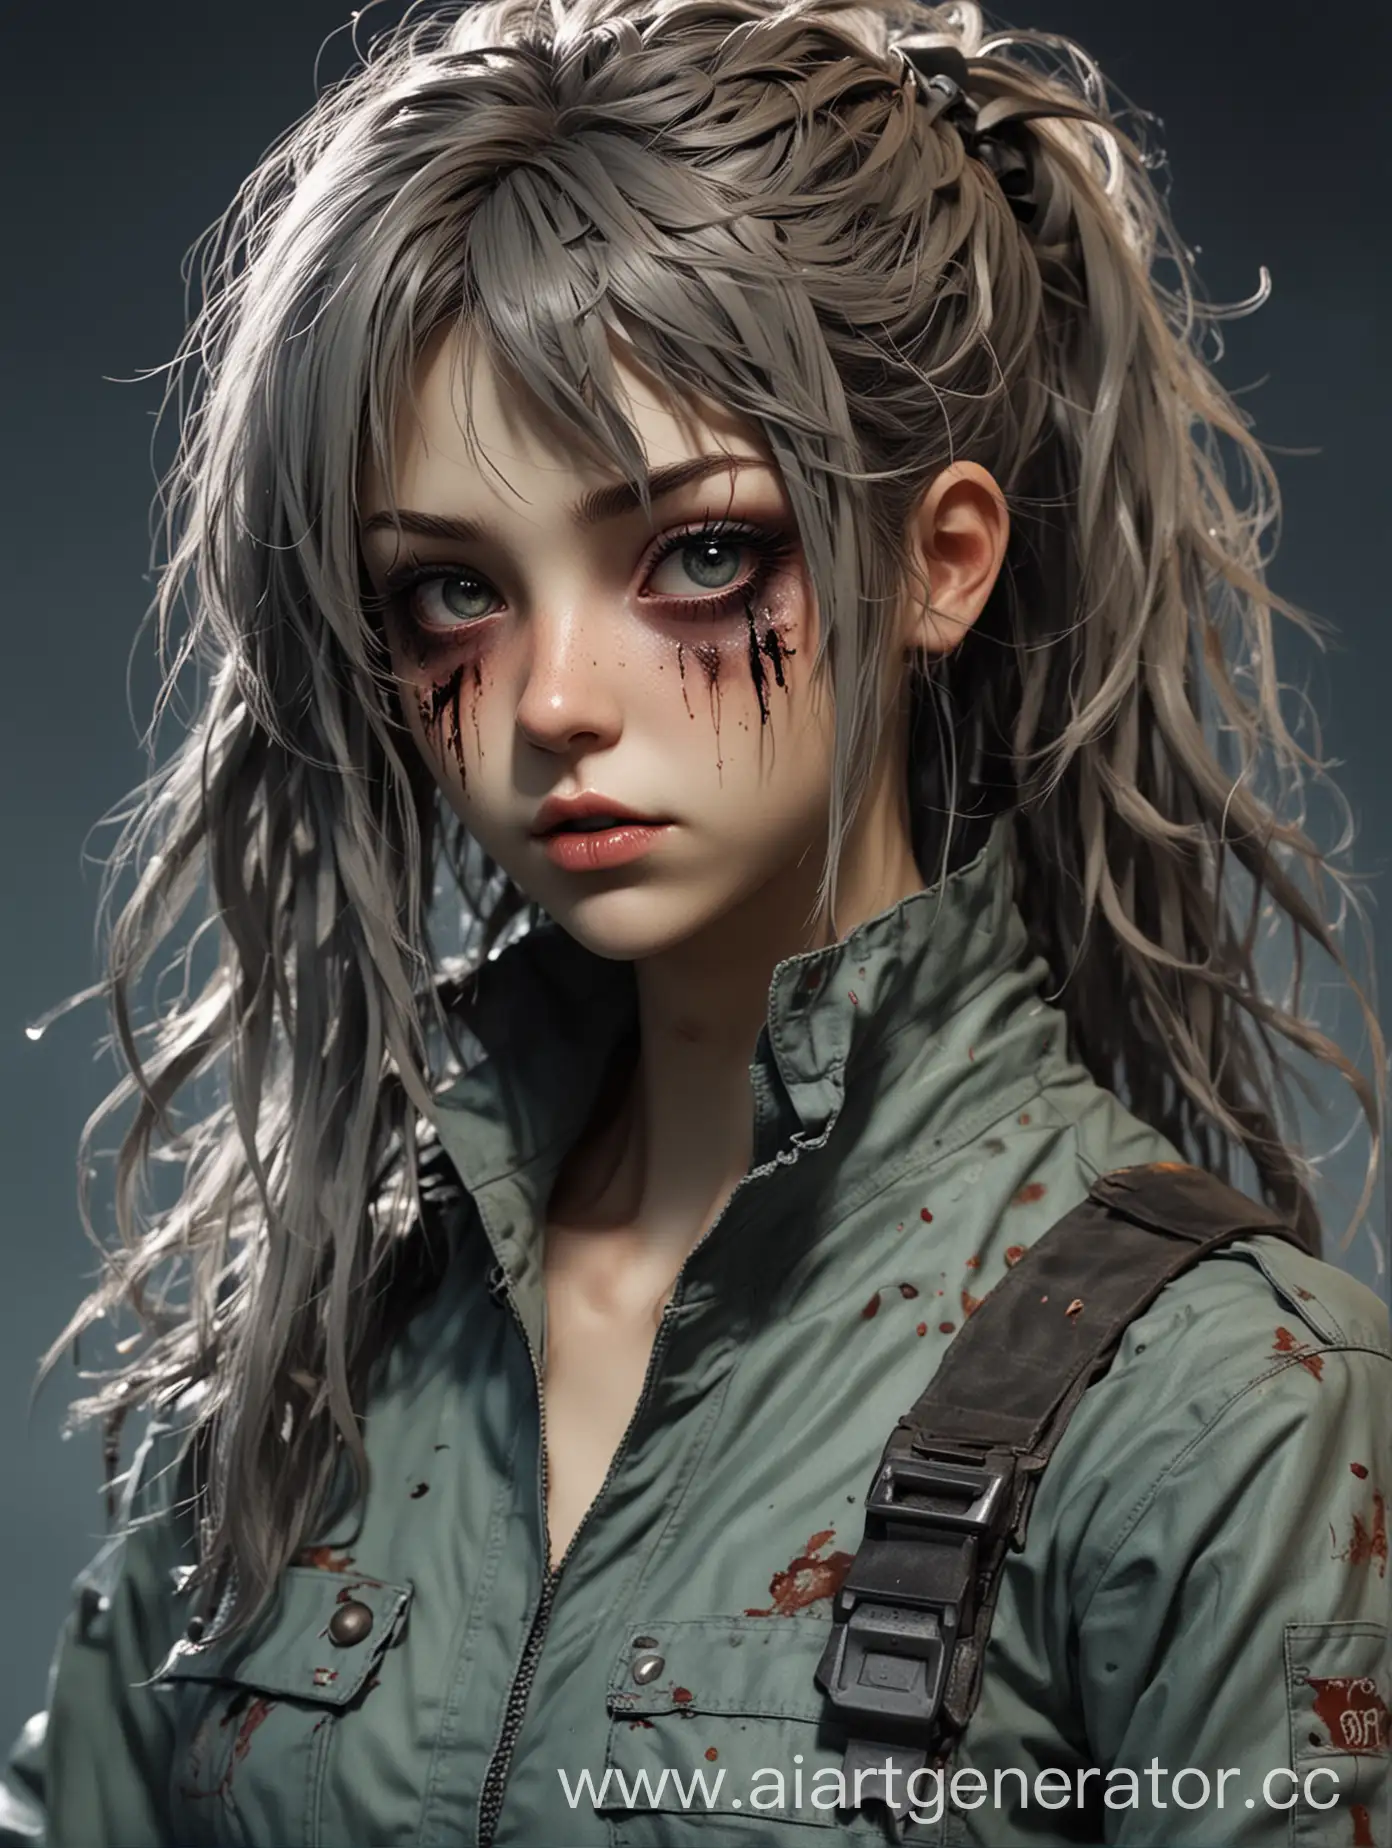 Mechanic-Zombie-Girl-with-Big-Hair-and-Gray-Eyelids-Anime-Illustration